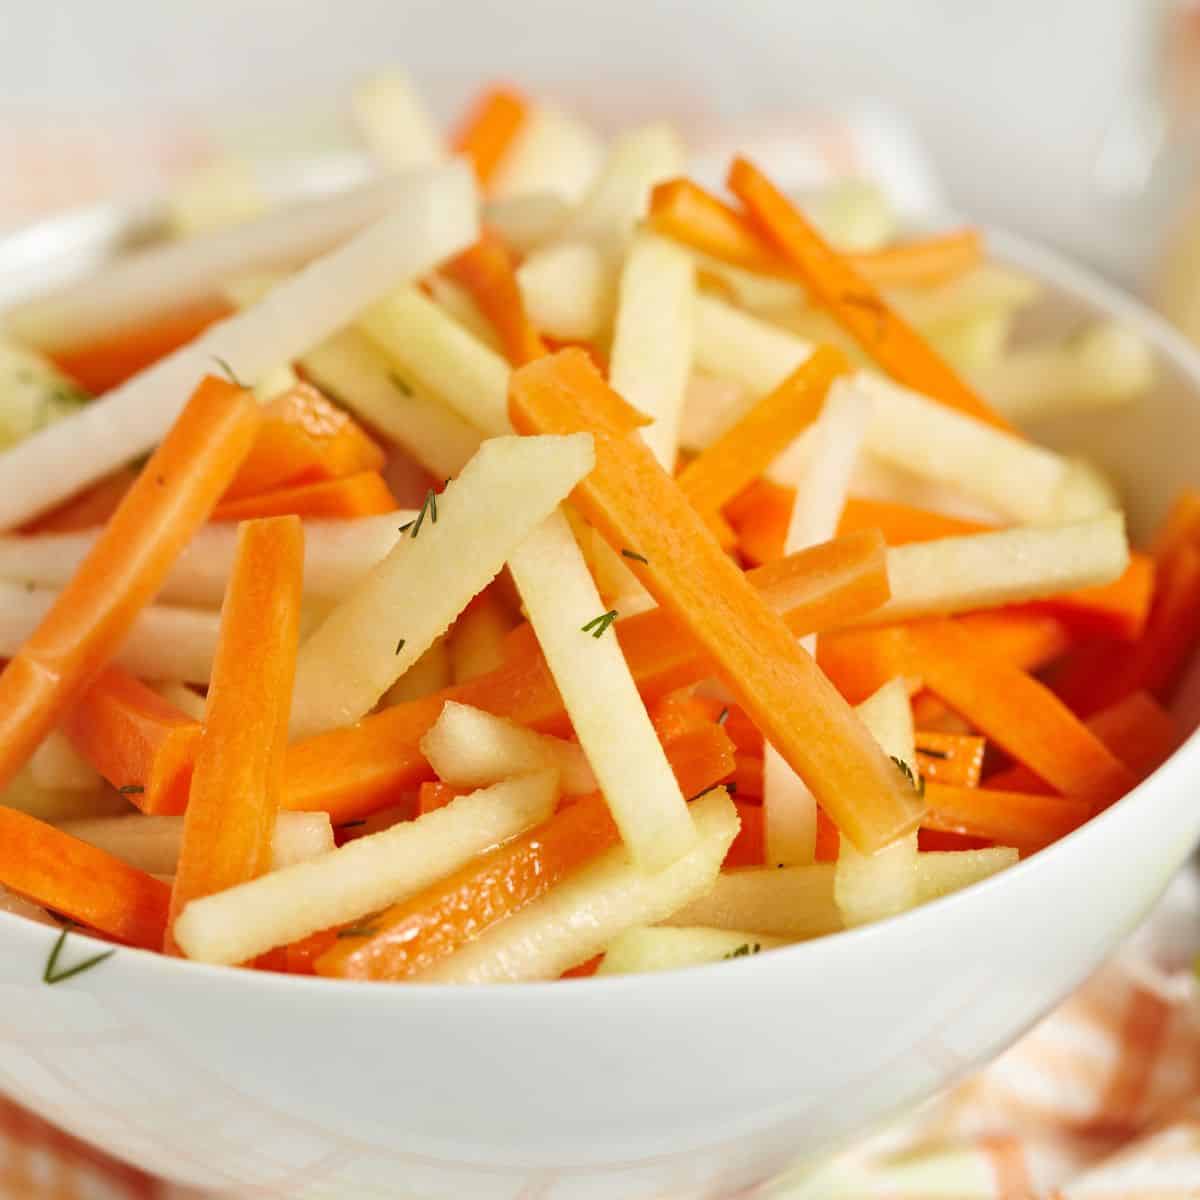 Kohlrabi, apple and carrot salad with dill